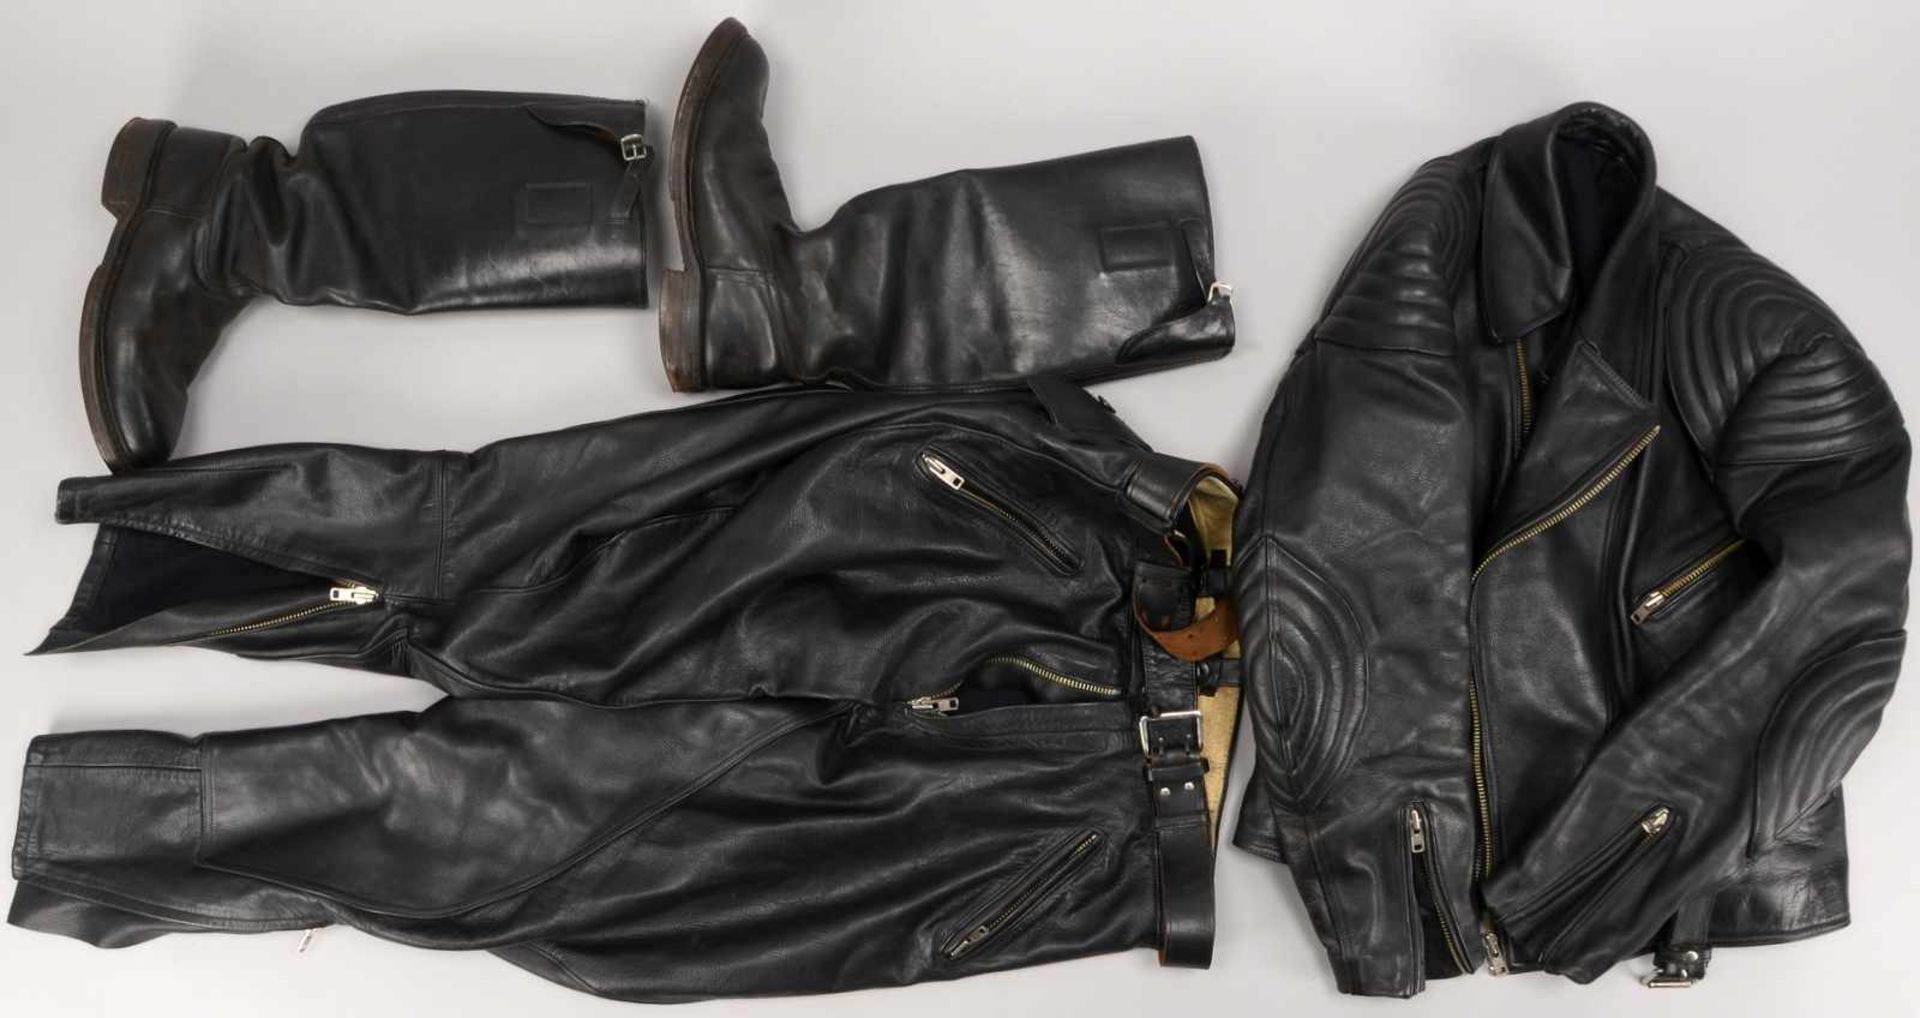 Motorradbekleidung (Handanfertigung), Jacke und Hose, aus dickem Echtleder, Gr. 52; anbei Paar